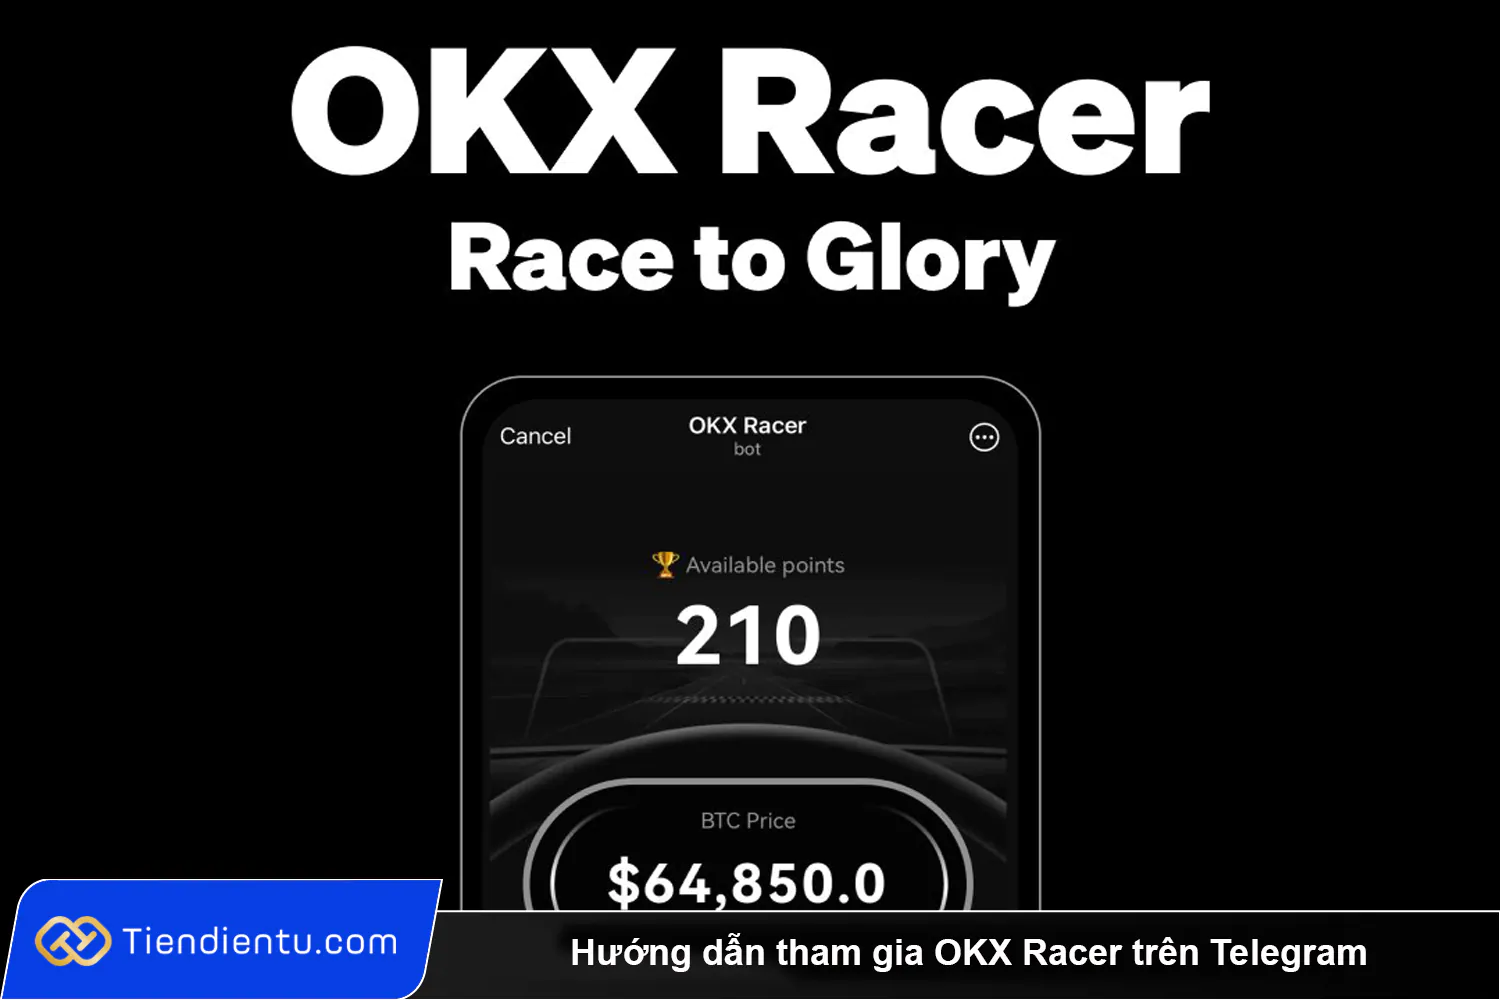 1Huong dan tham gia OKX Racer tren Telegram